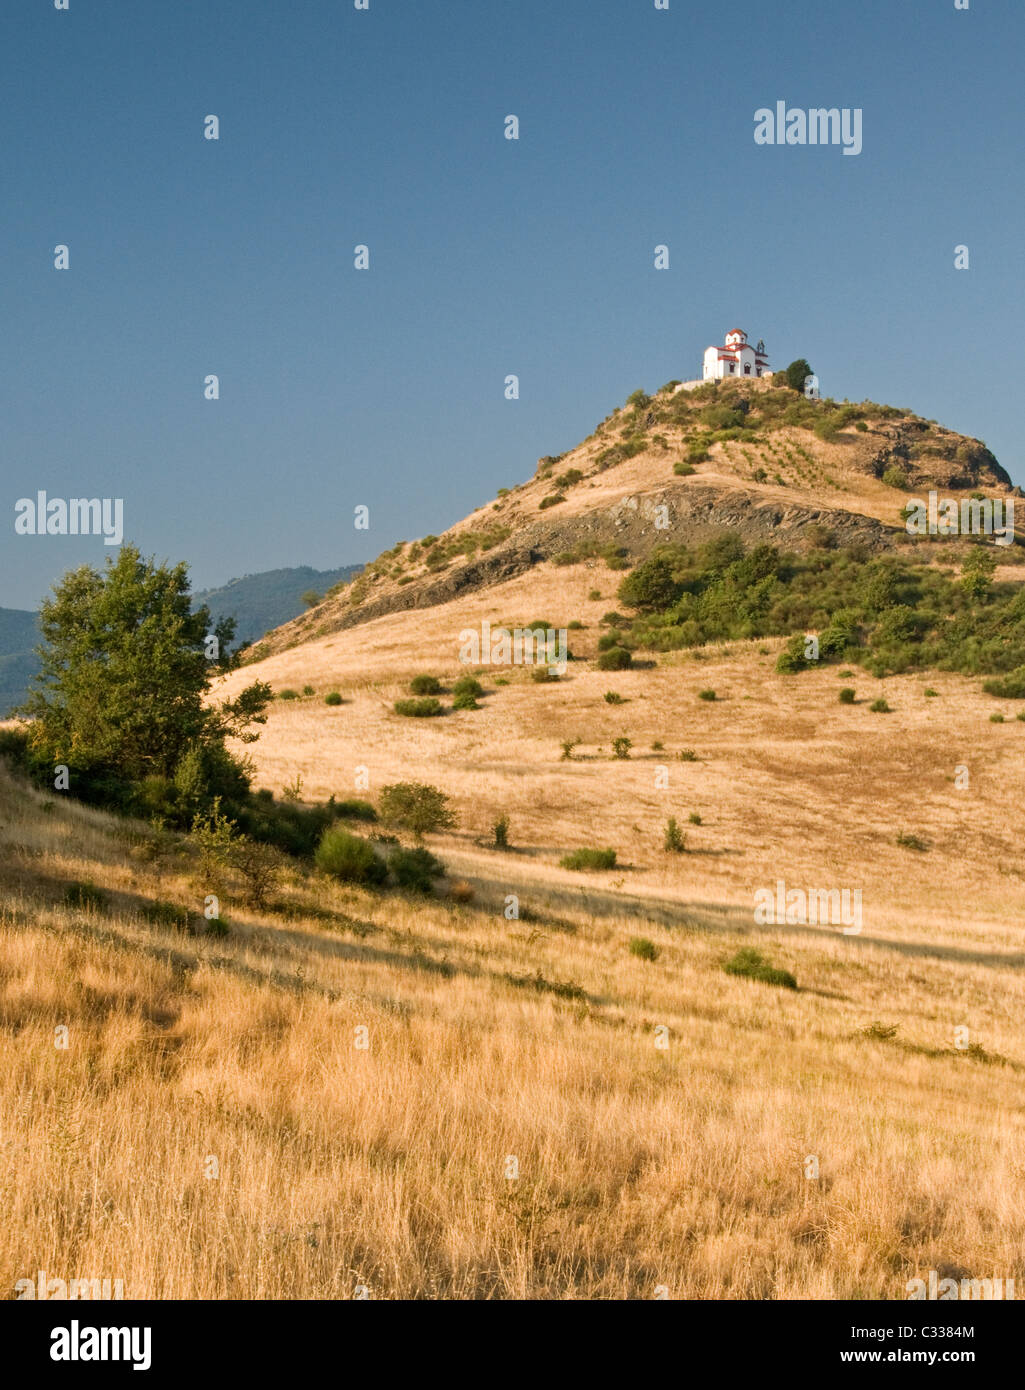 Idyllic Traditional Greek Church on Hilltop near Trigona, Trigona, Plain of Thessaly, Greece, Europe Stock Photo